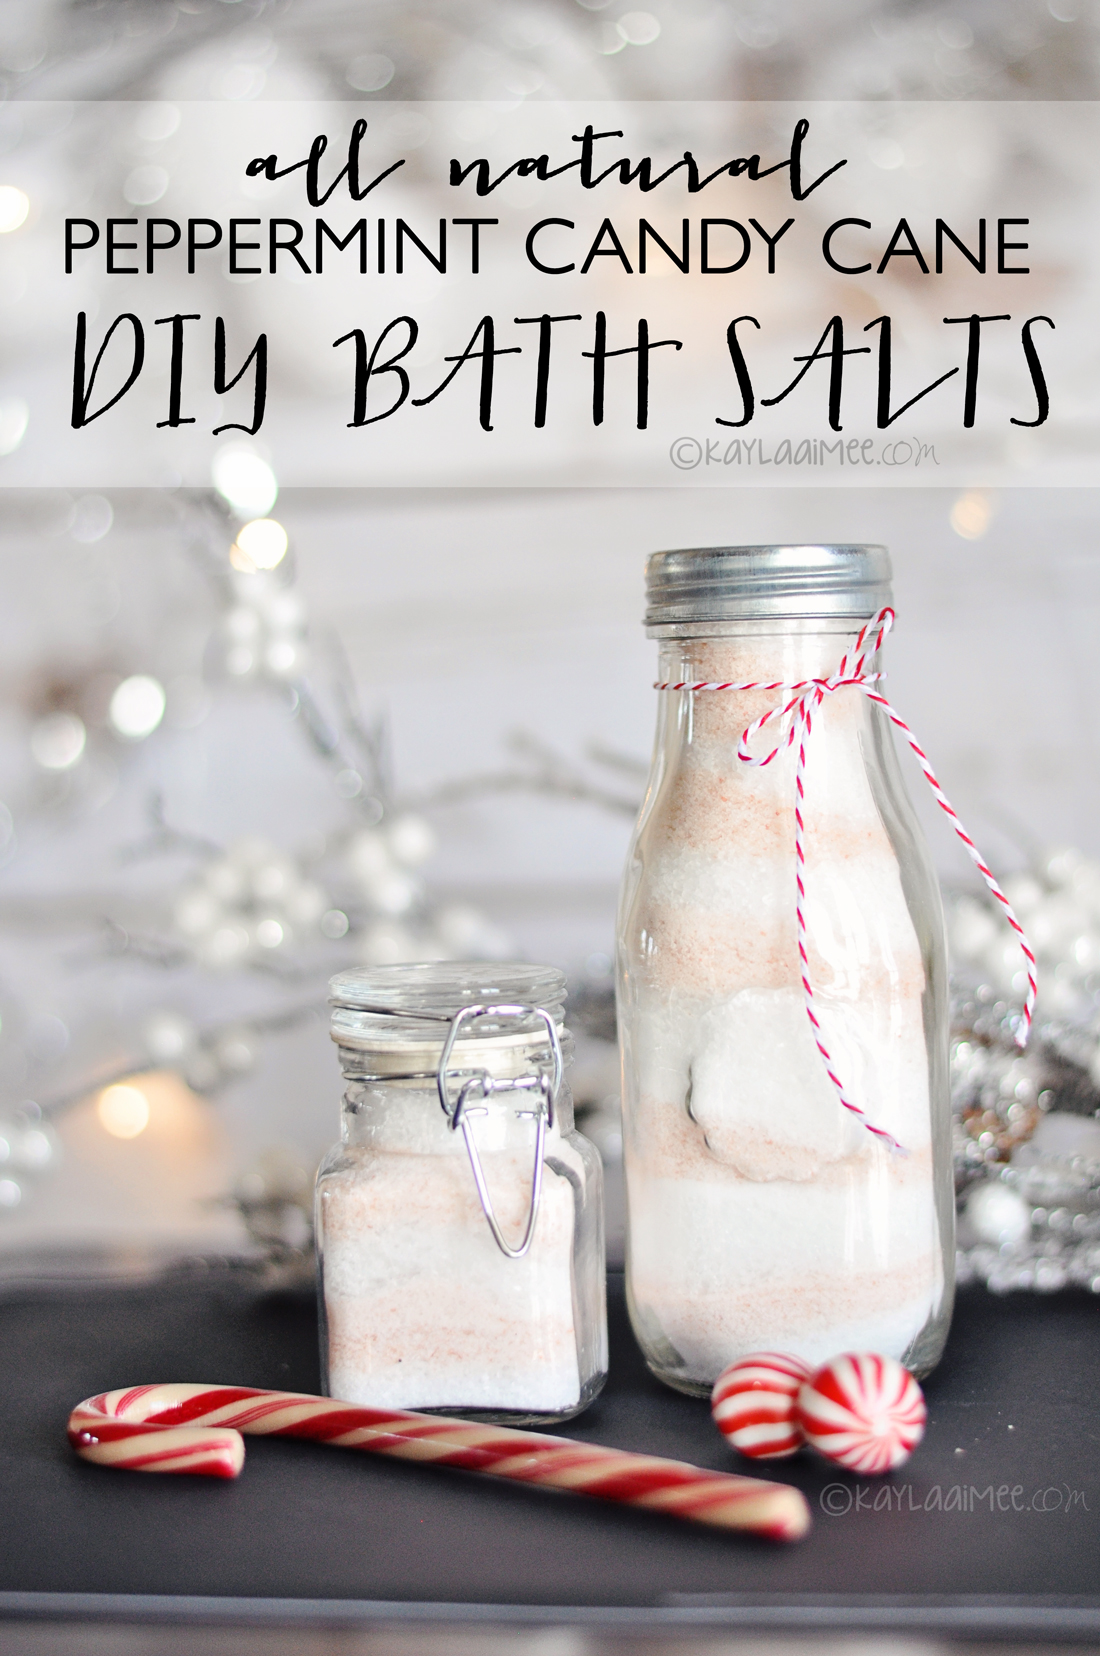 Such a cute and easy gift idea! DIY Candy Cane Striped Peppermint Bath Salts